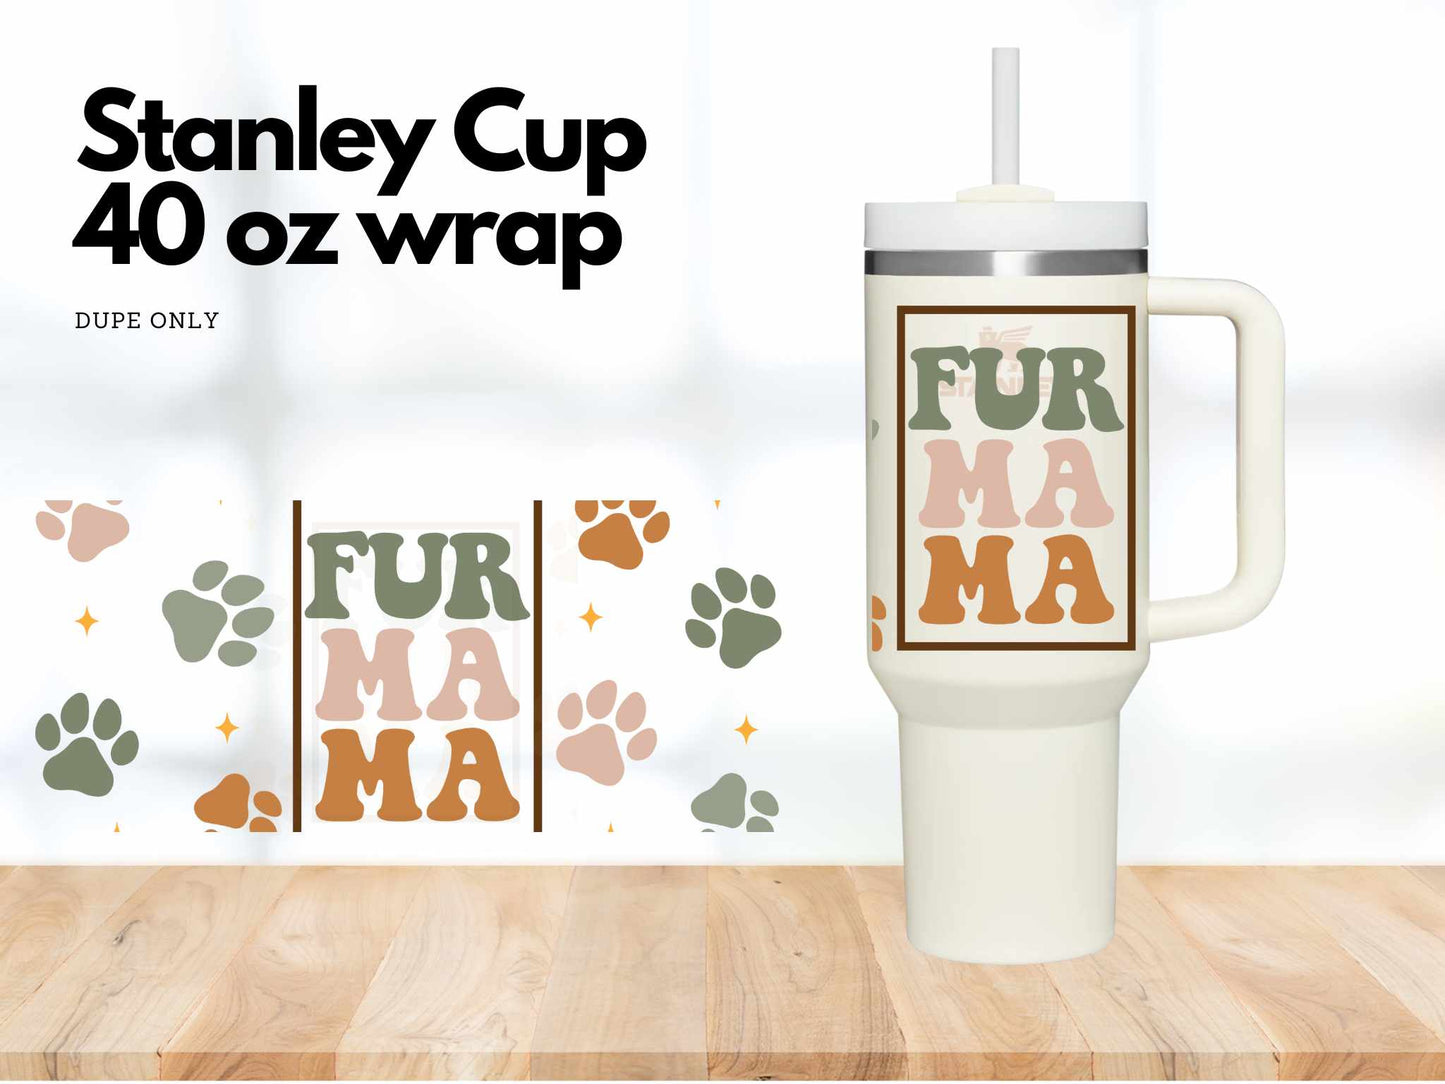 Fur Mama | Dupe 40 oz Wrap | Vinyl Only